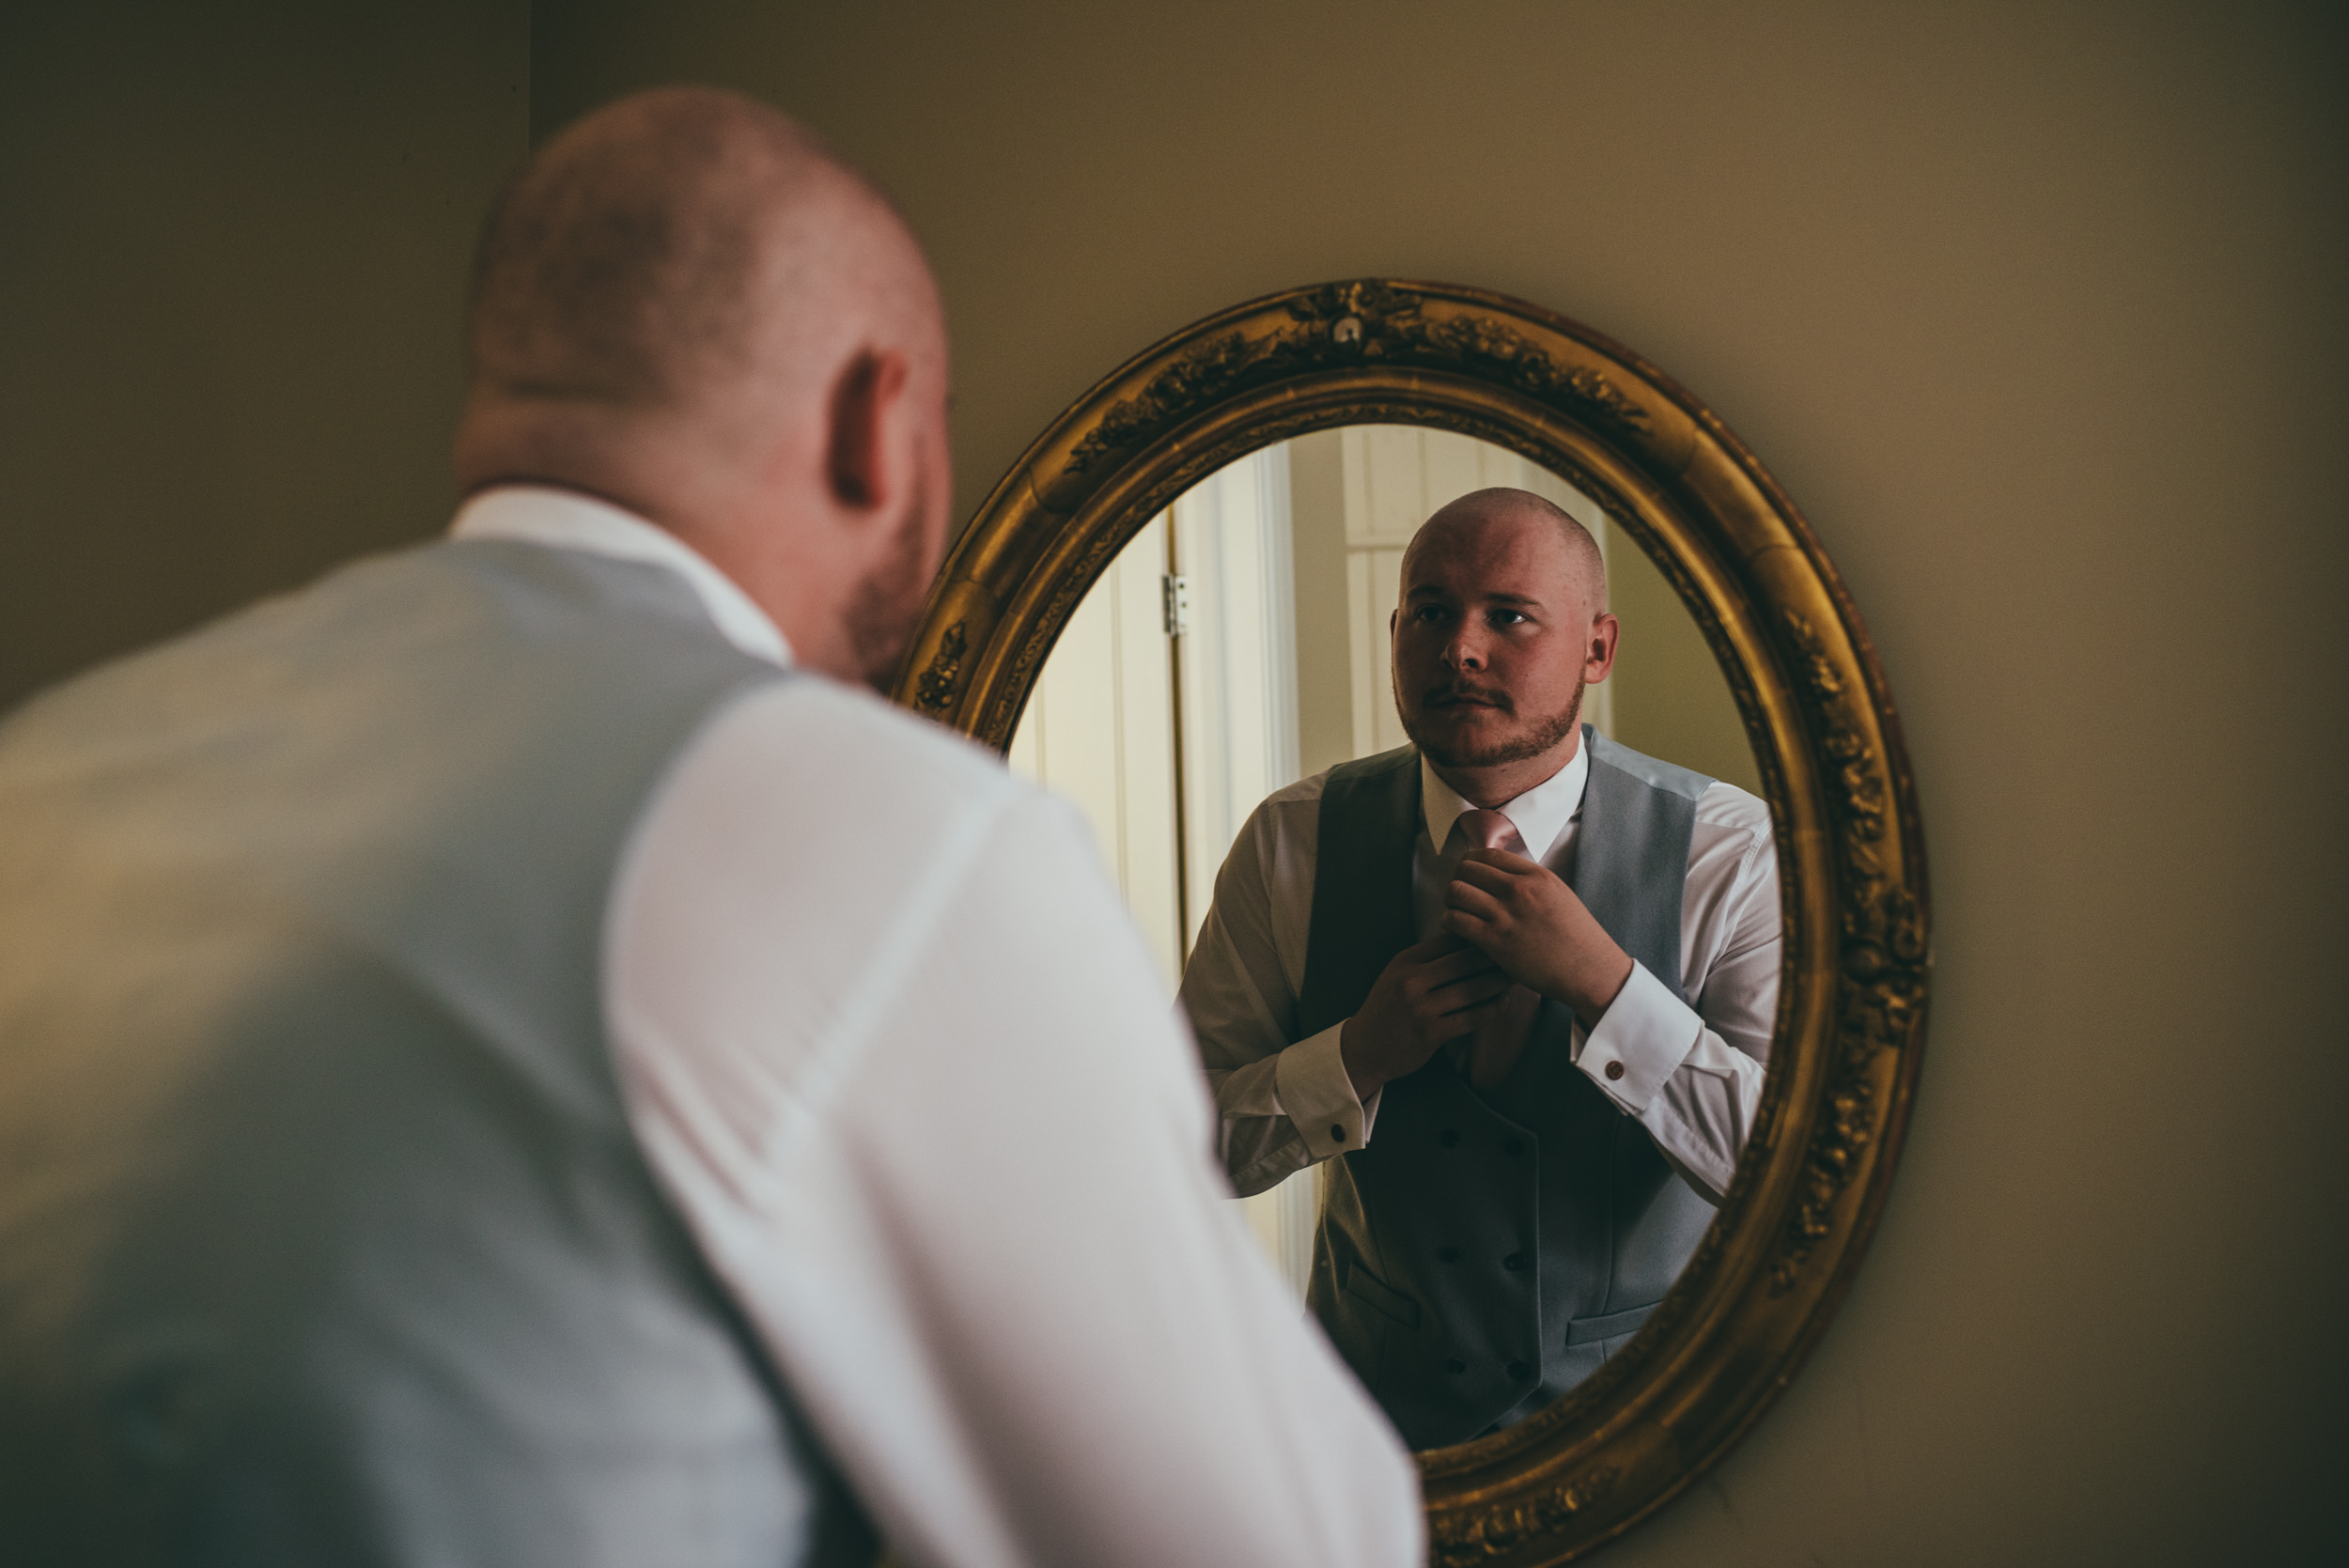 Groom fixing his tie in the mirror